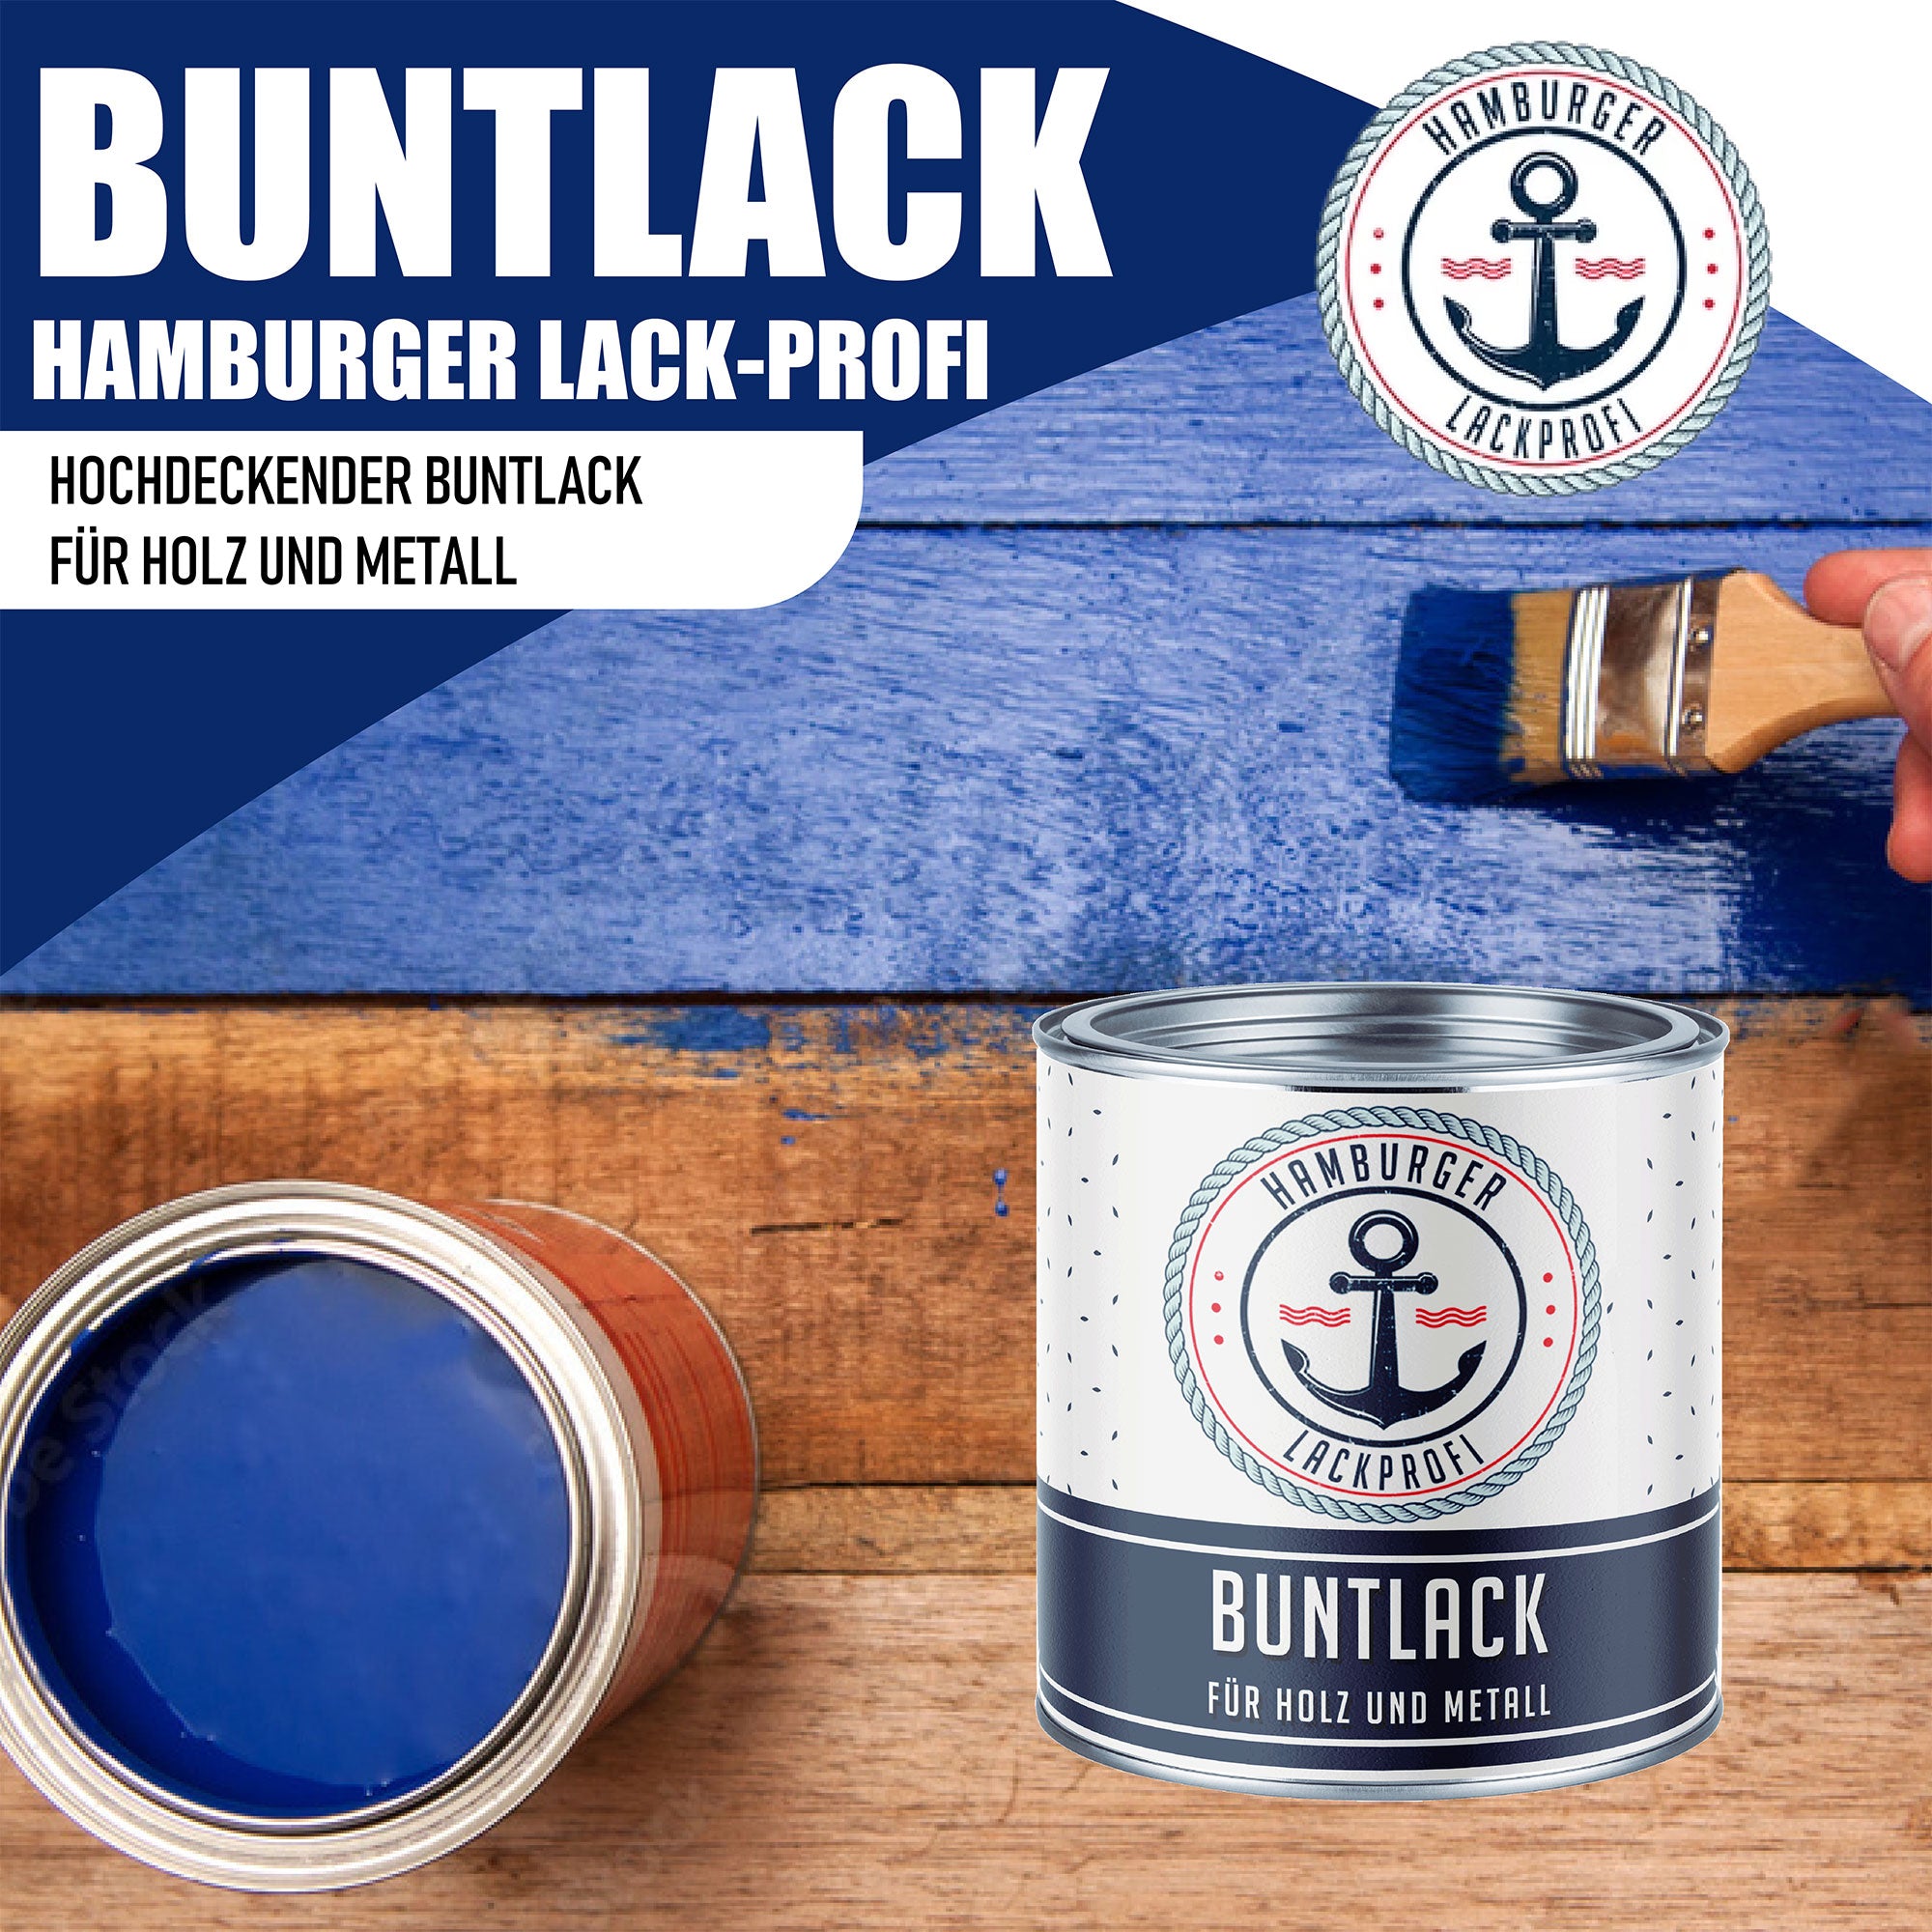 Hamburger Lack-Profi Buntlack Schwarzblau RAL 5004 - Robuster Kunstharzlack